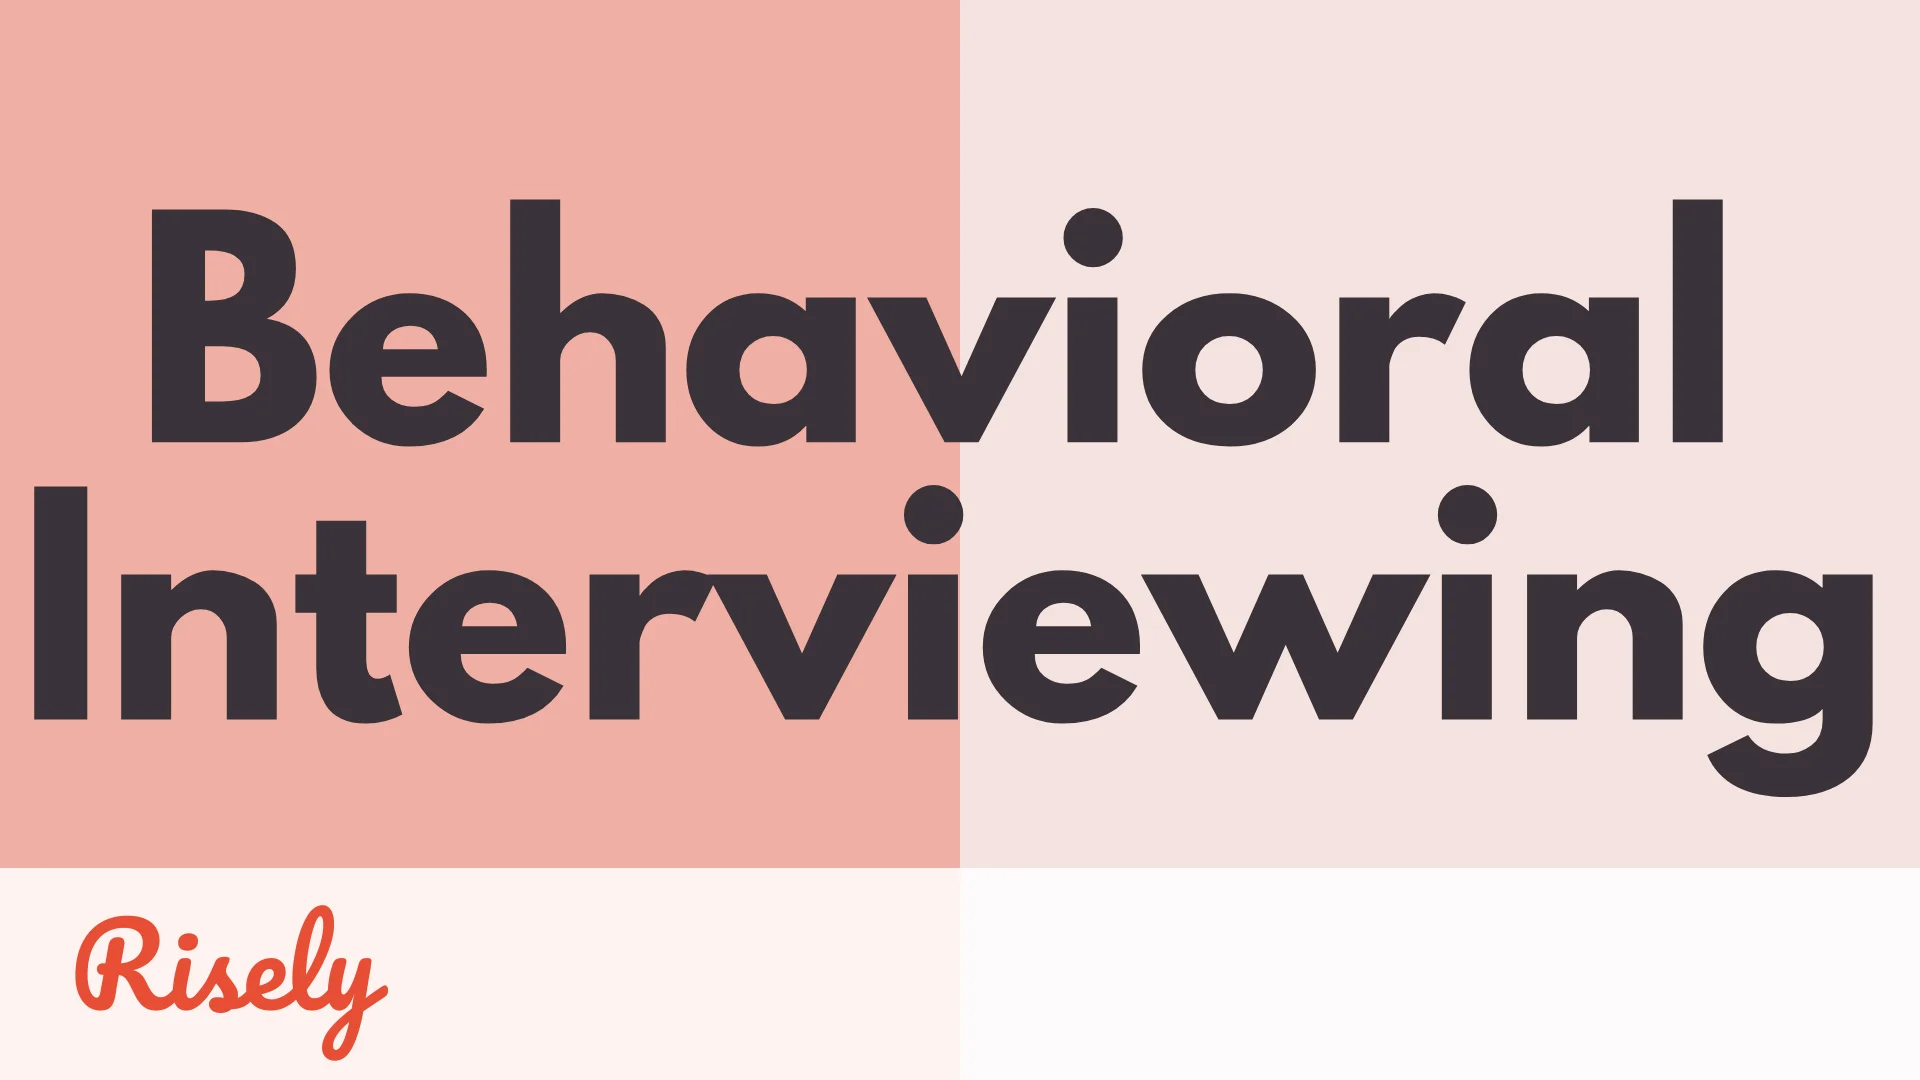 behavioral interviewing